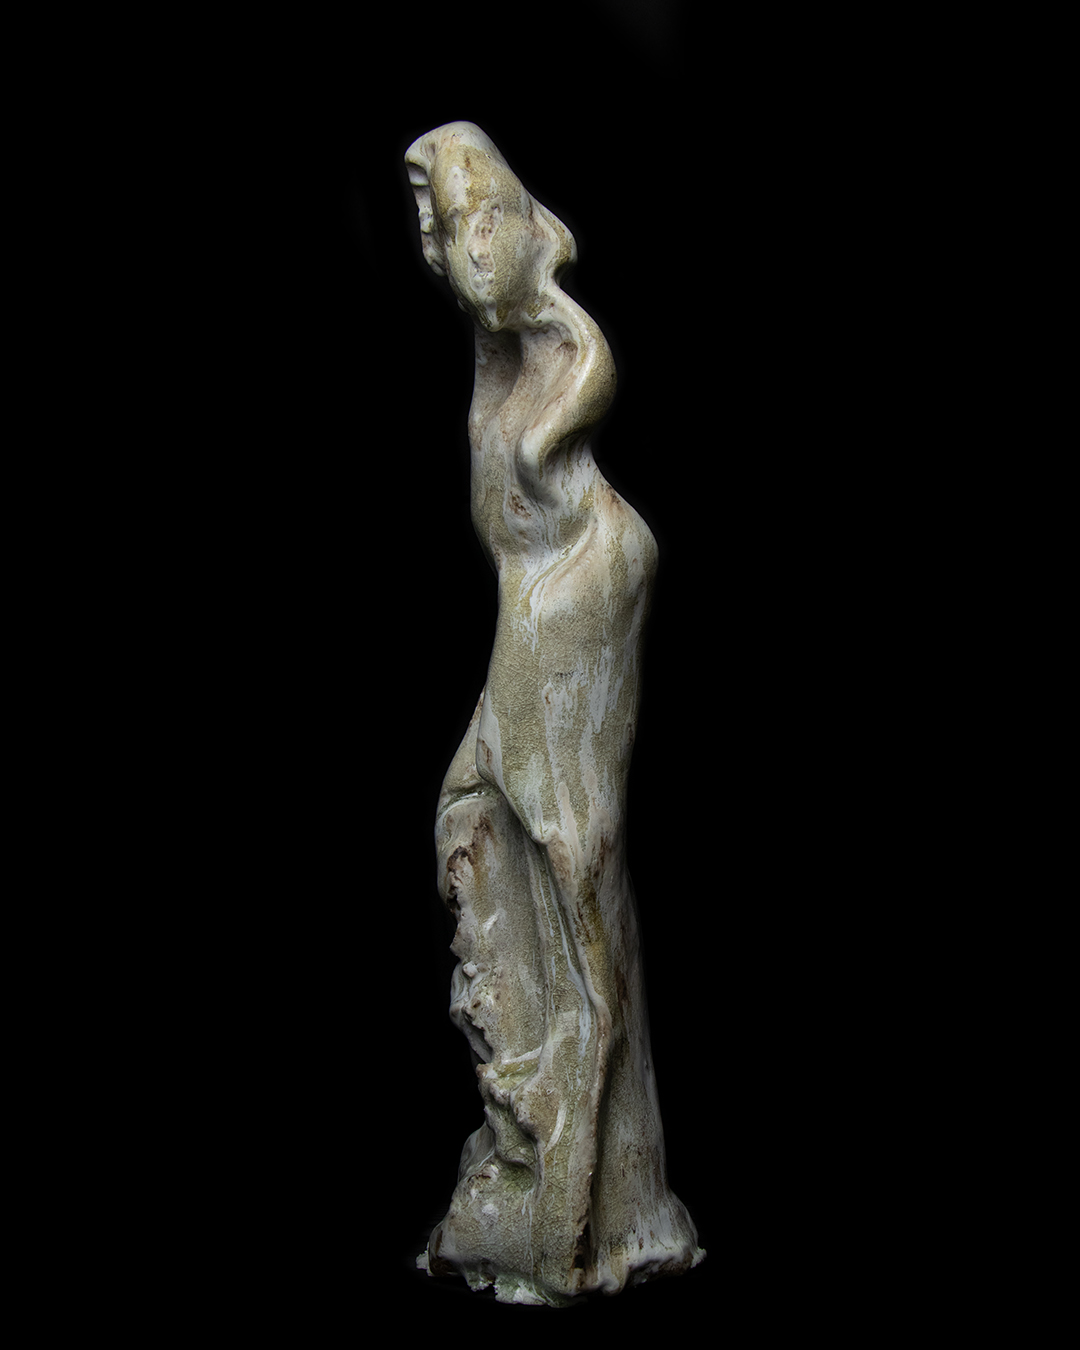 Nicolas-Pierre Réveillard, sculpture "Absence" ∼ "Missing" (6)